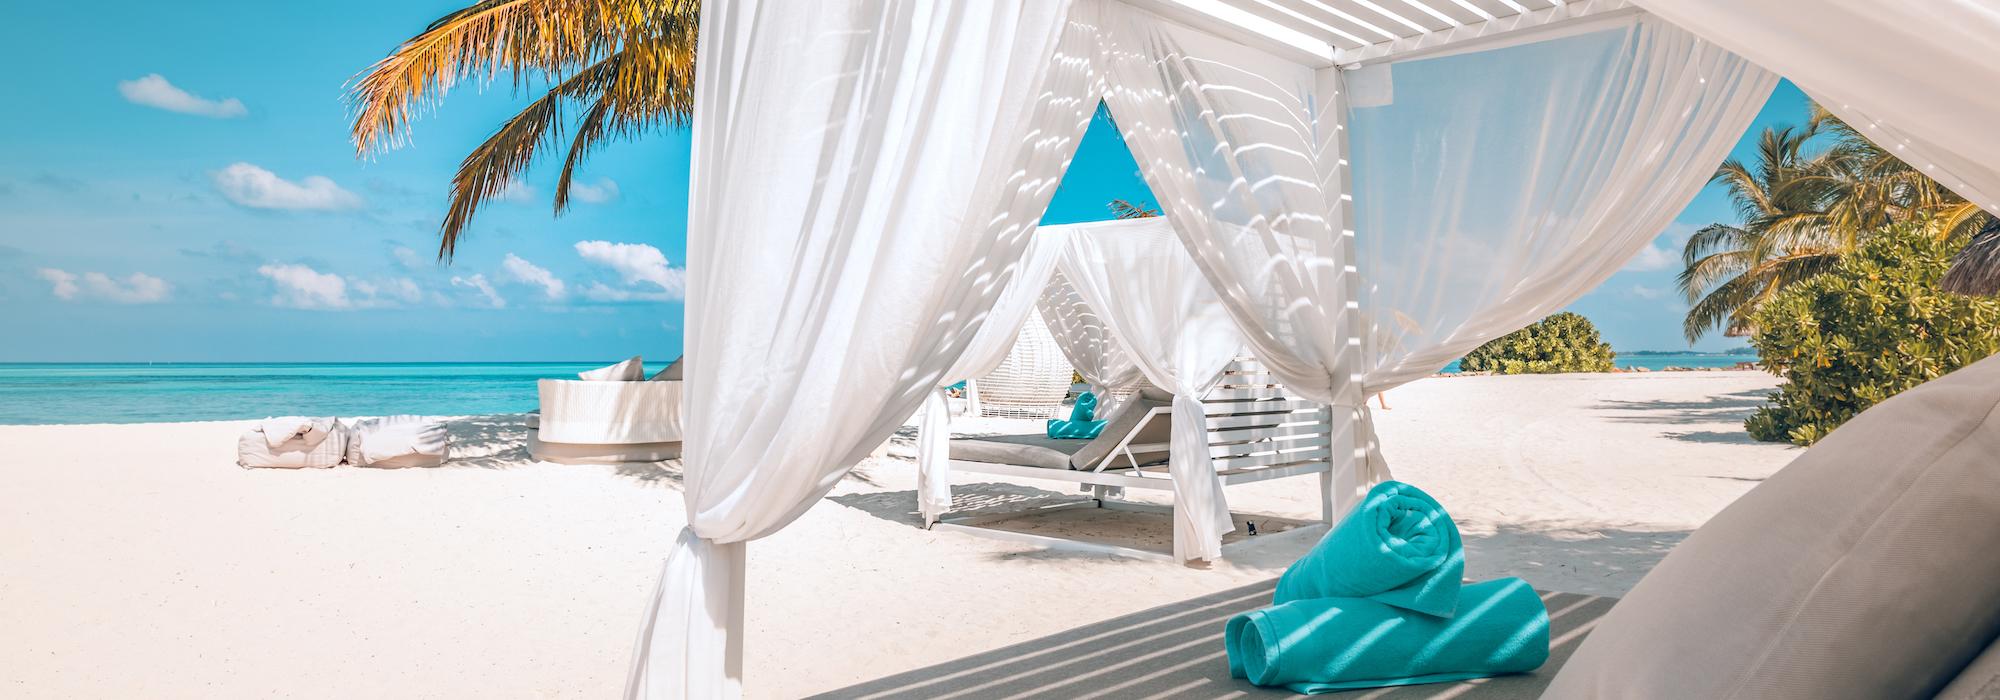 Luxury beach canopy, Seychelles